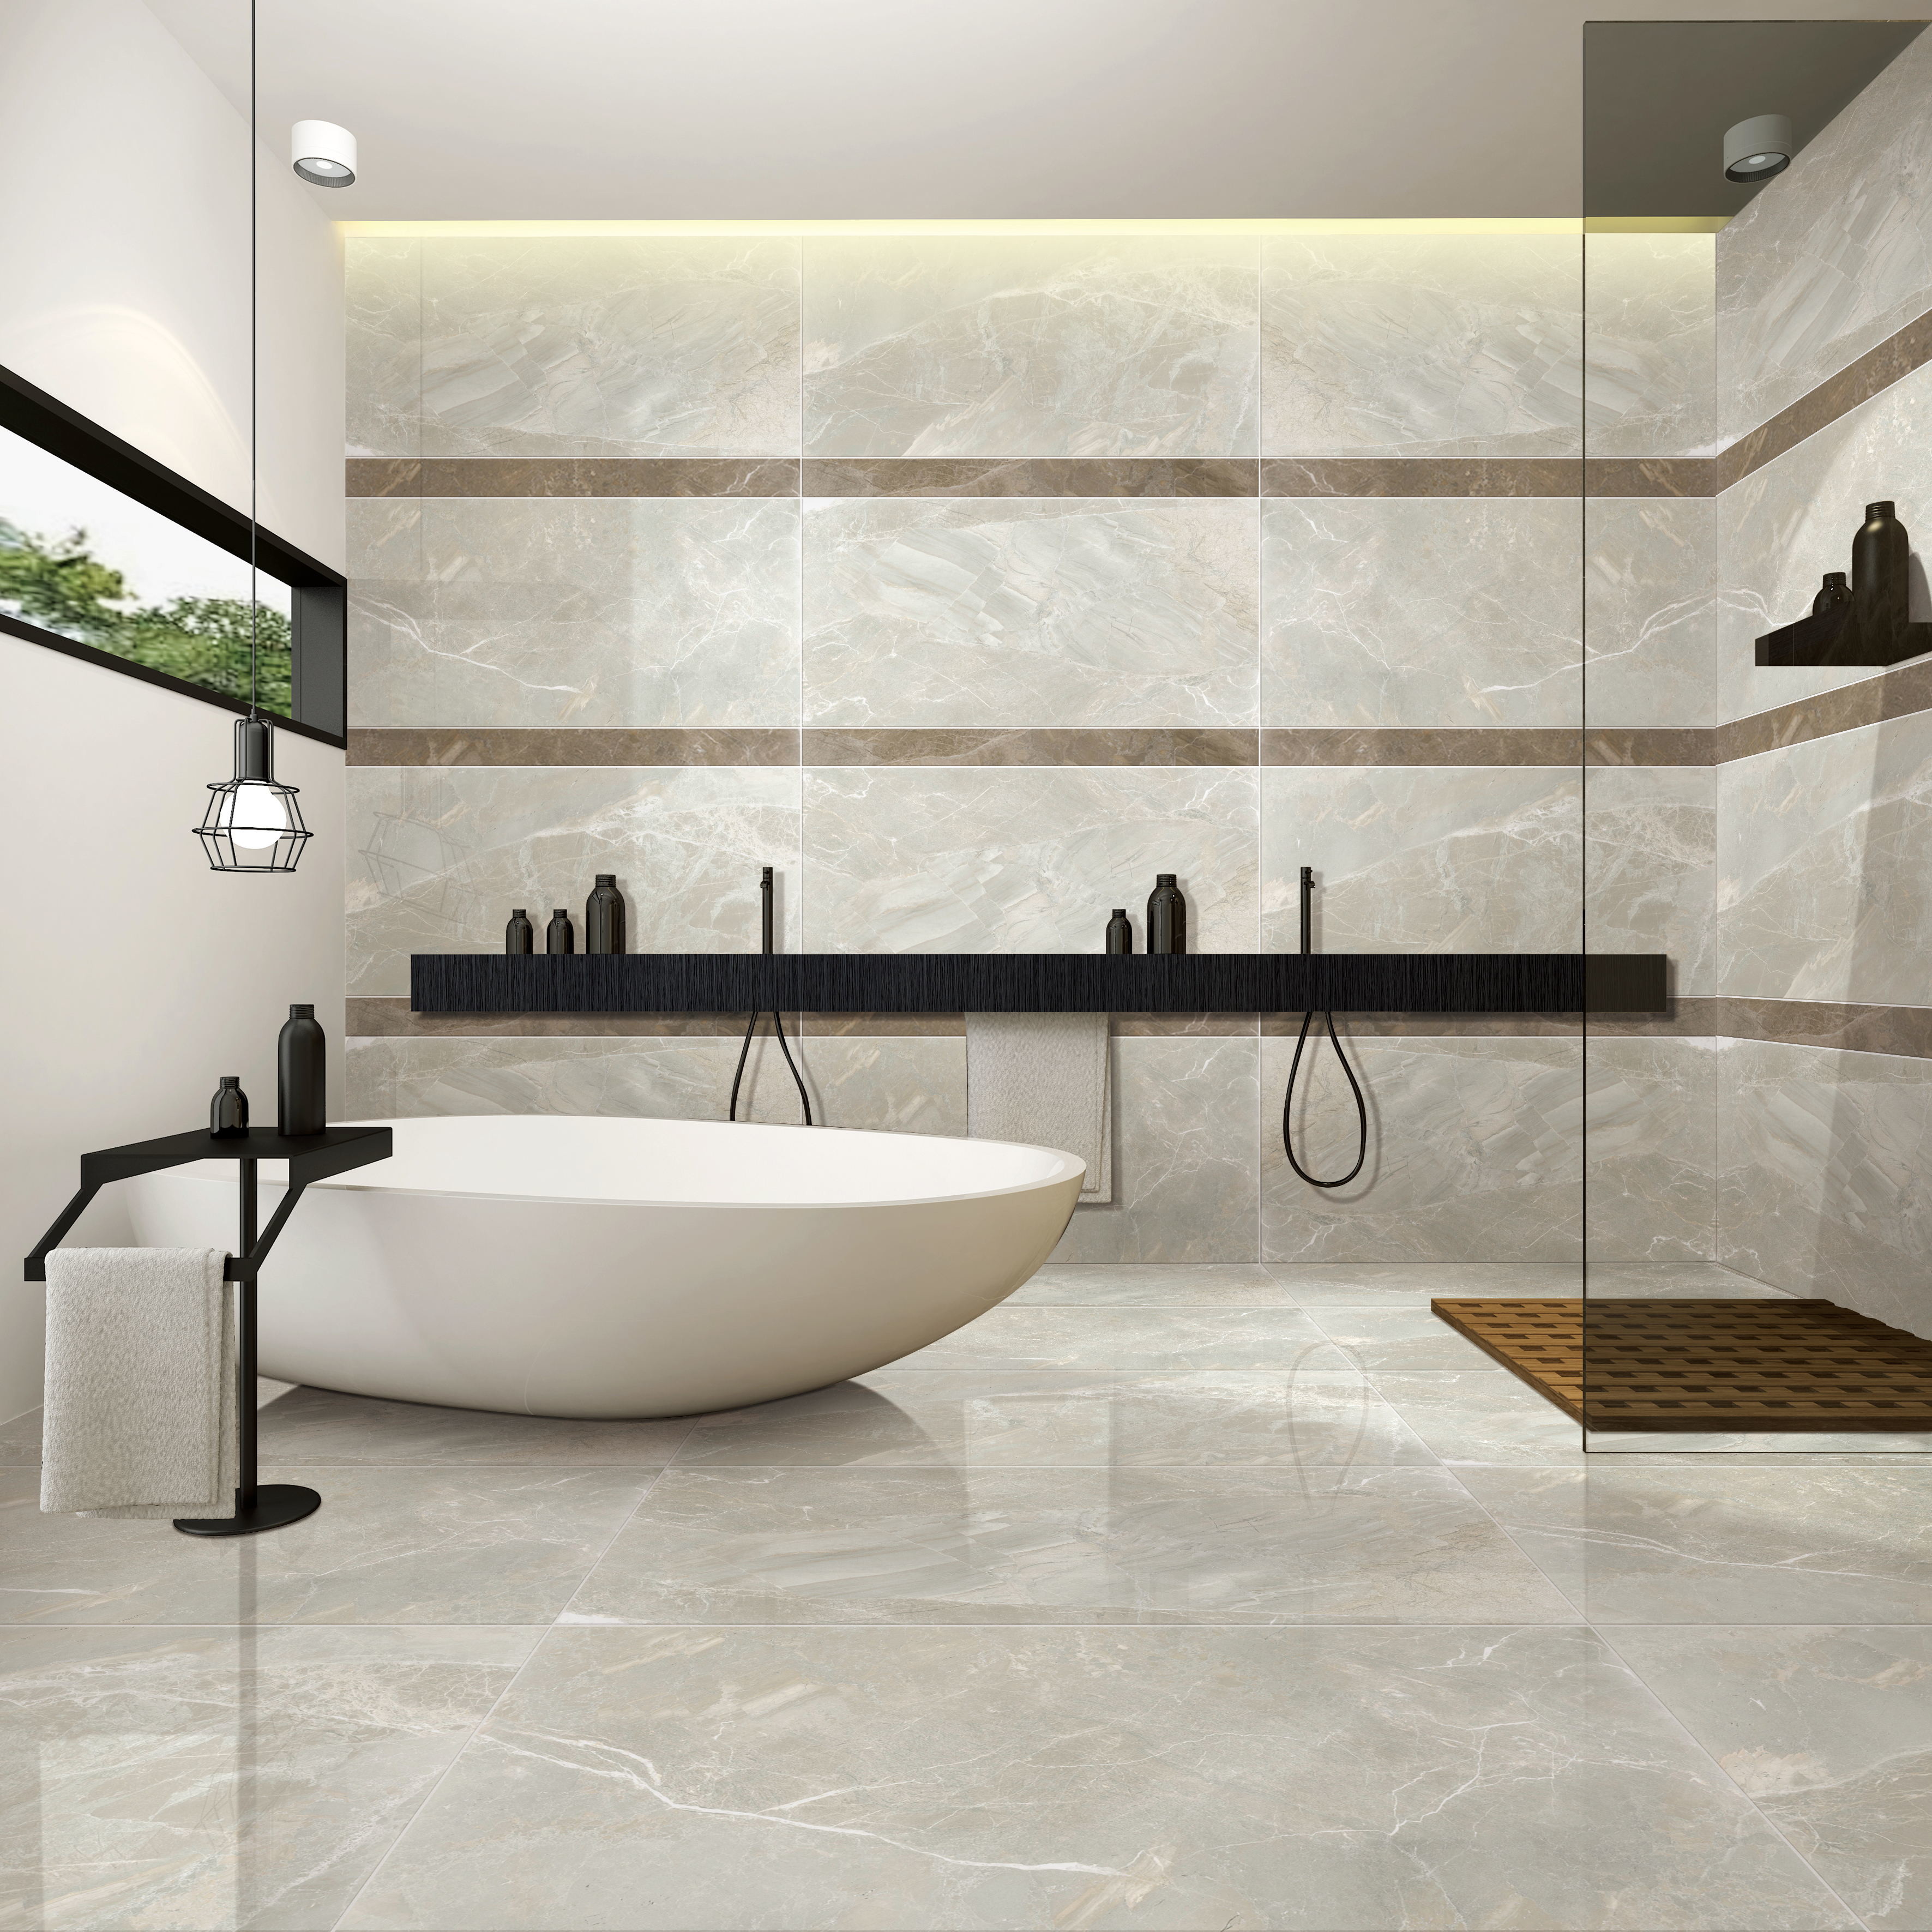 Ps27345748 Light Grey Stone Look Bathroom Tiles Porcelain Tile Flooring Anti Slip 